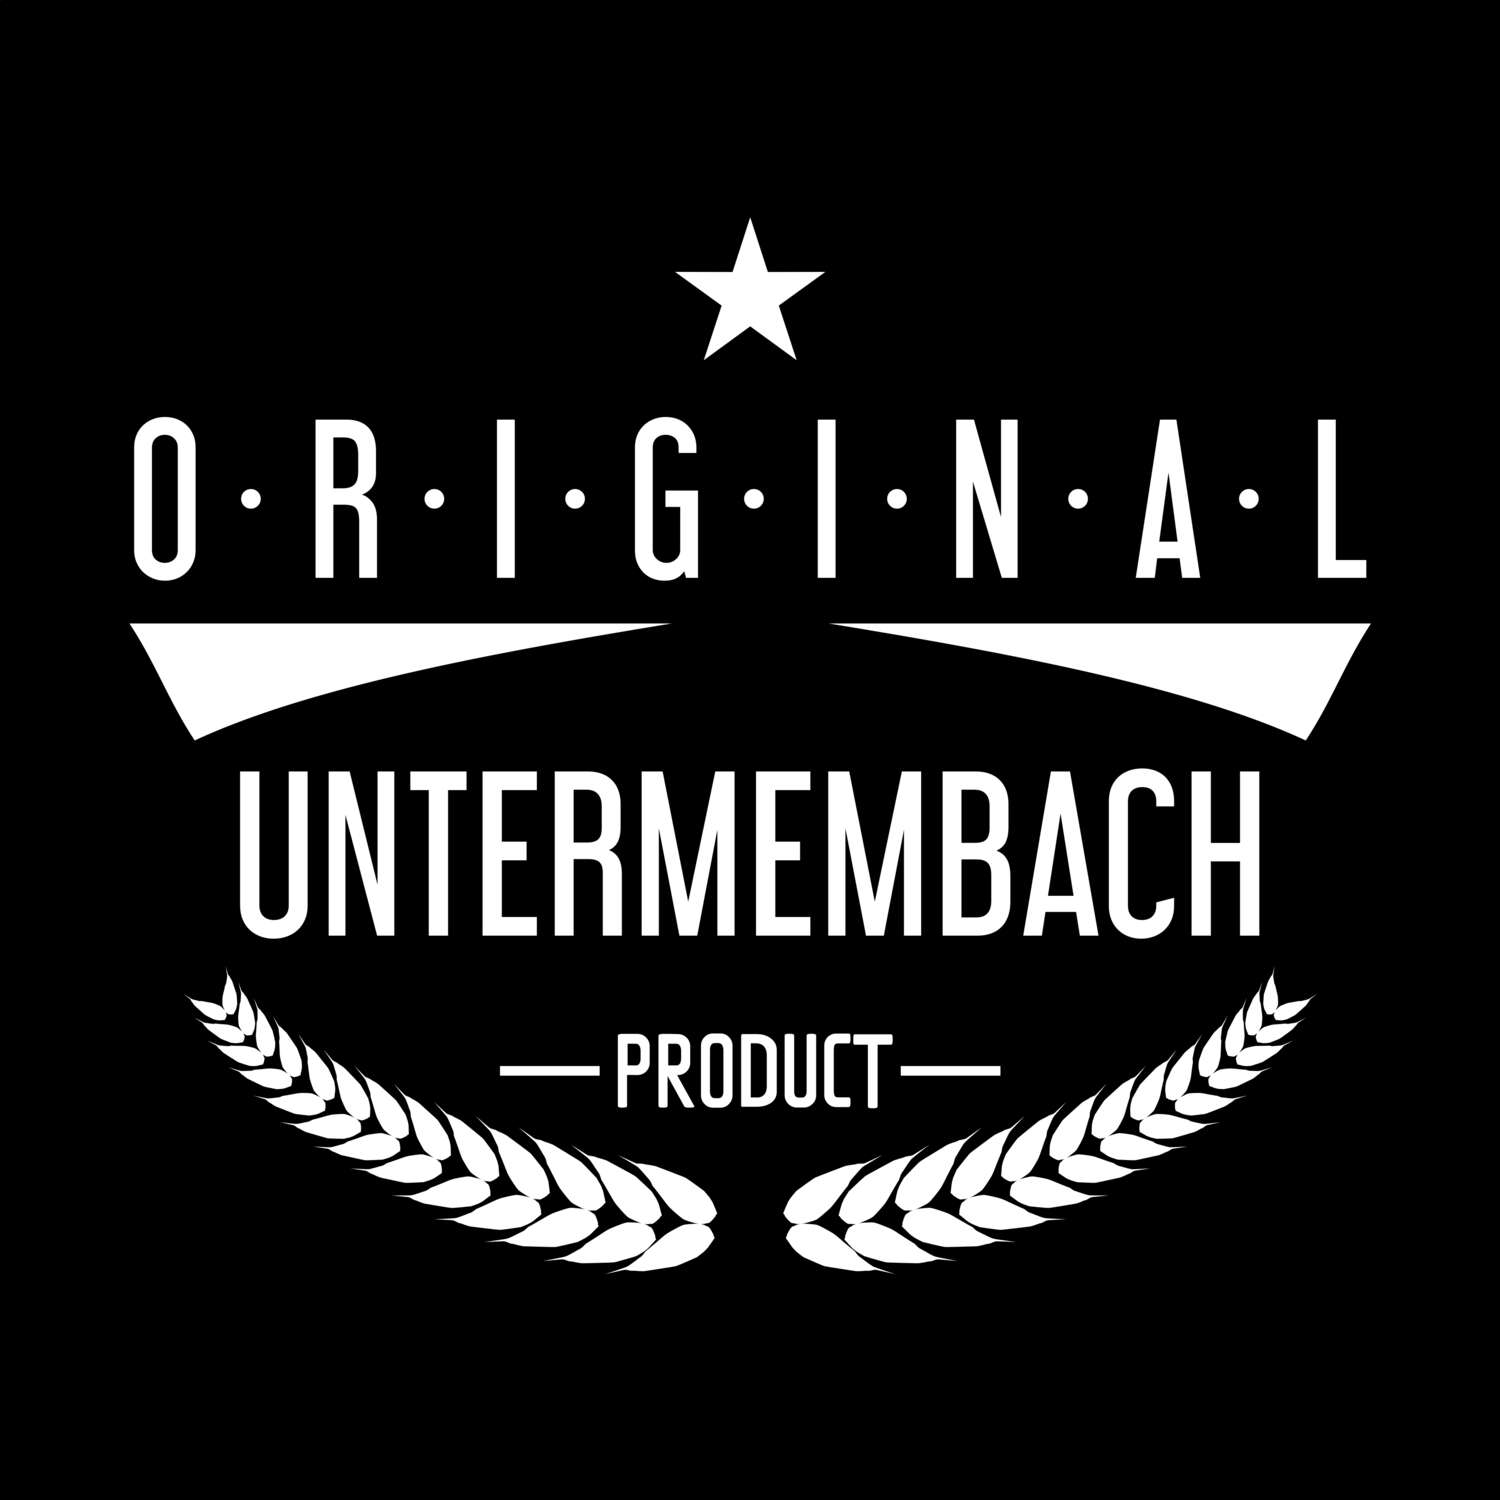 Untermembach T-Shirt »Original Product«